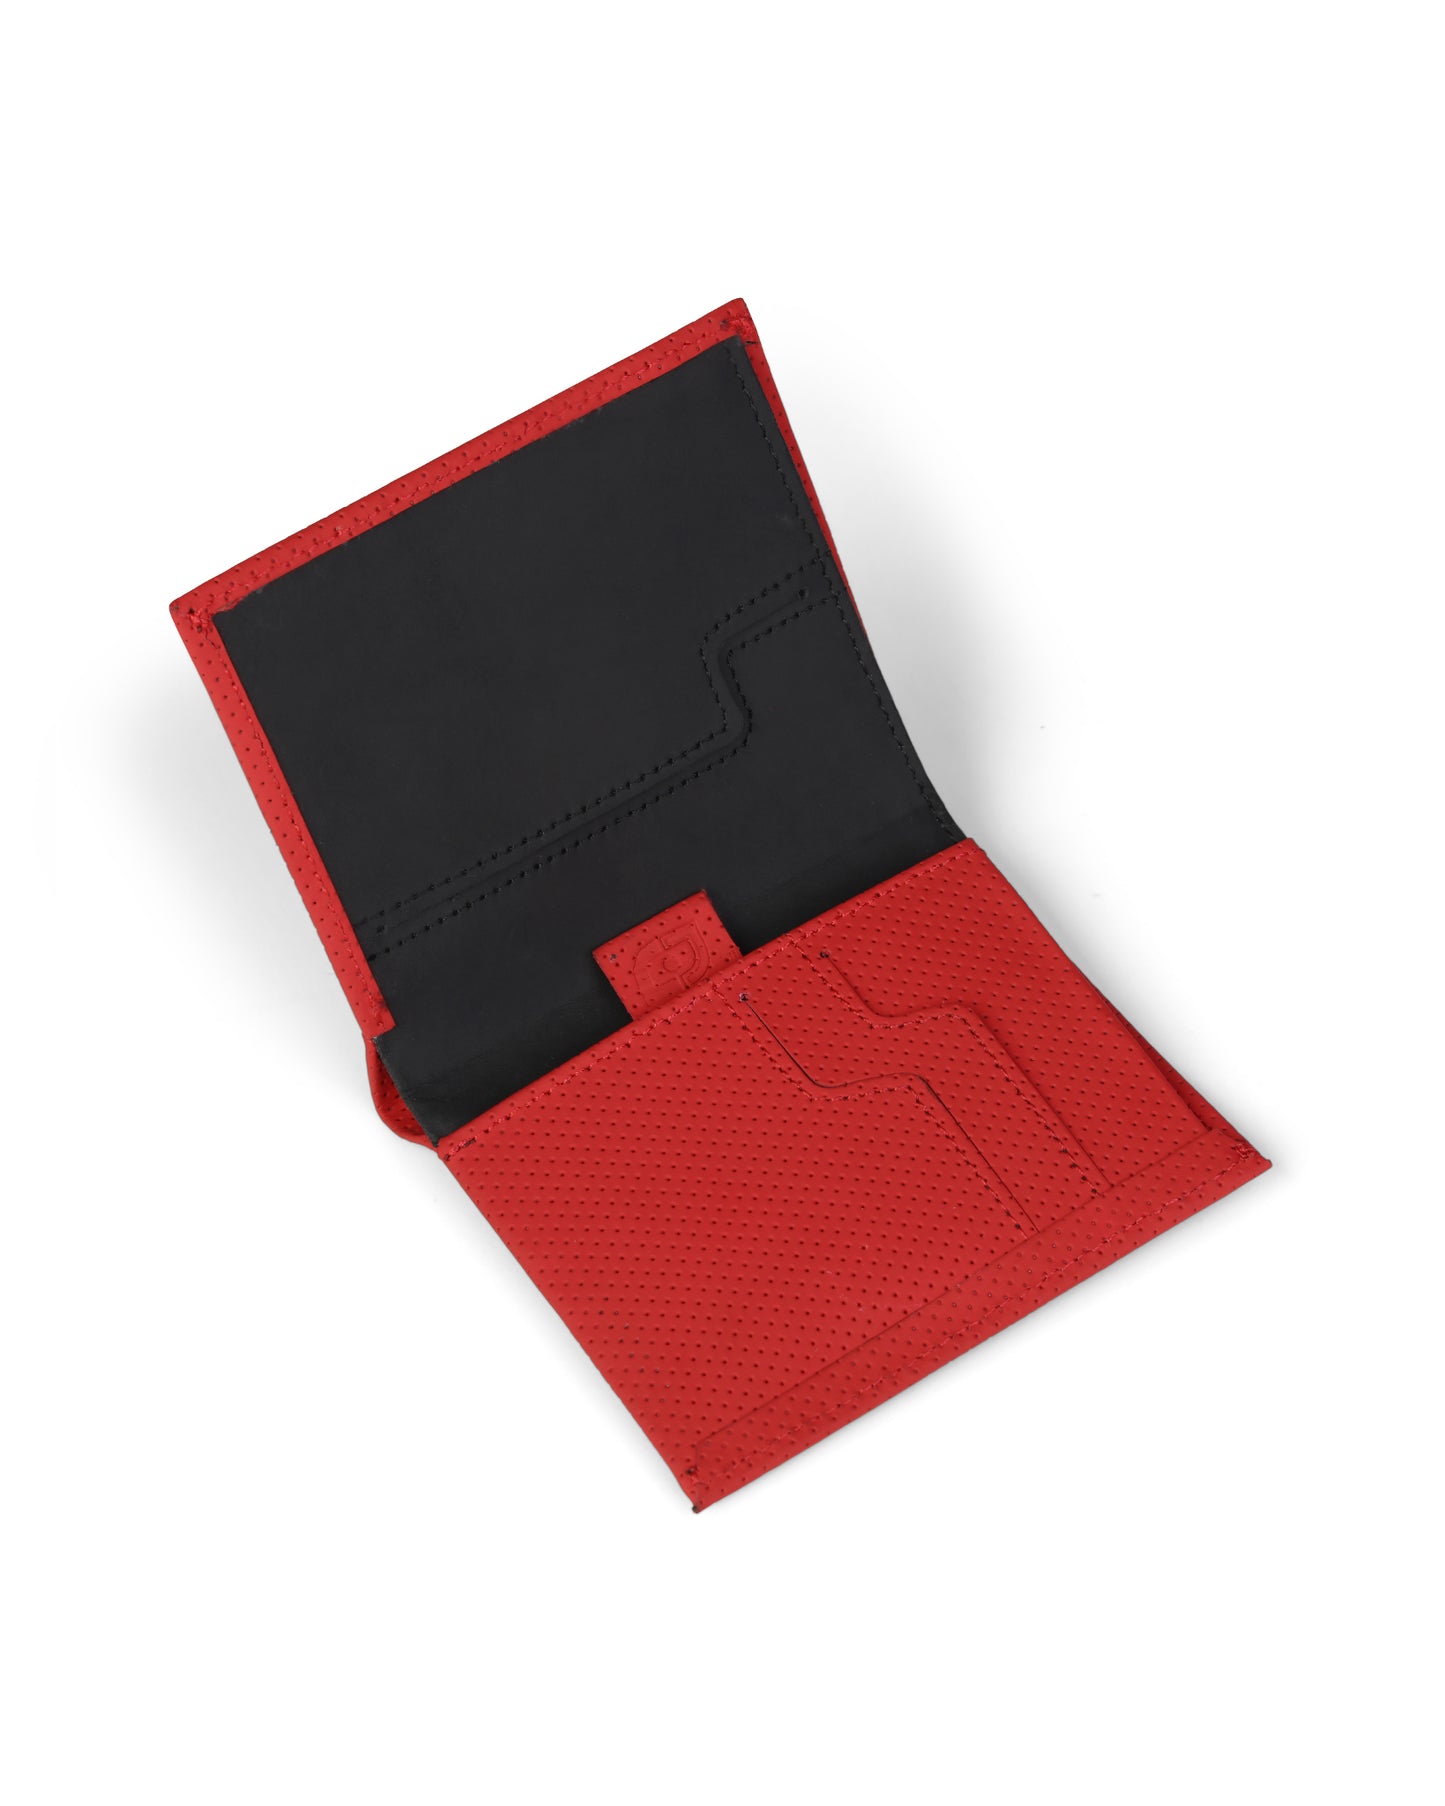 Slim Leather Wallet - Rojo/Negro